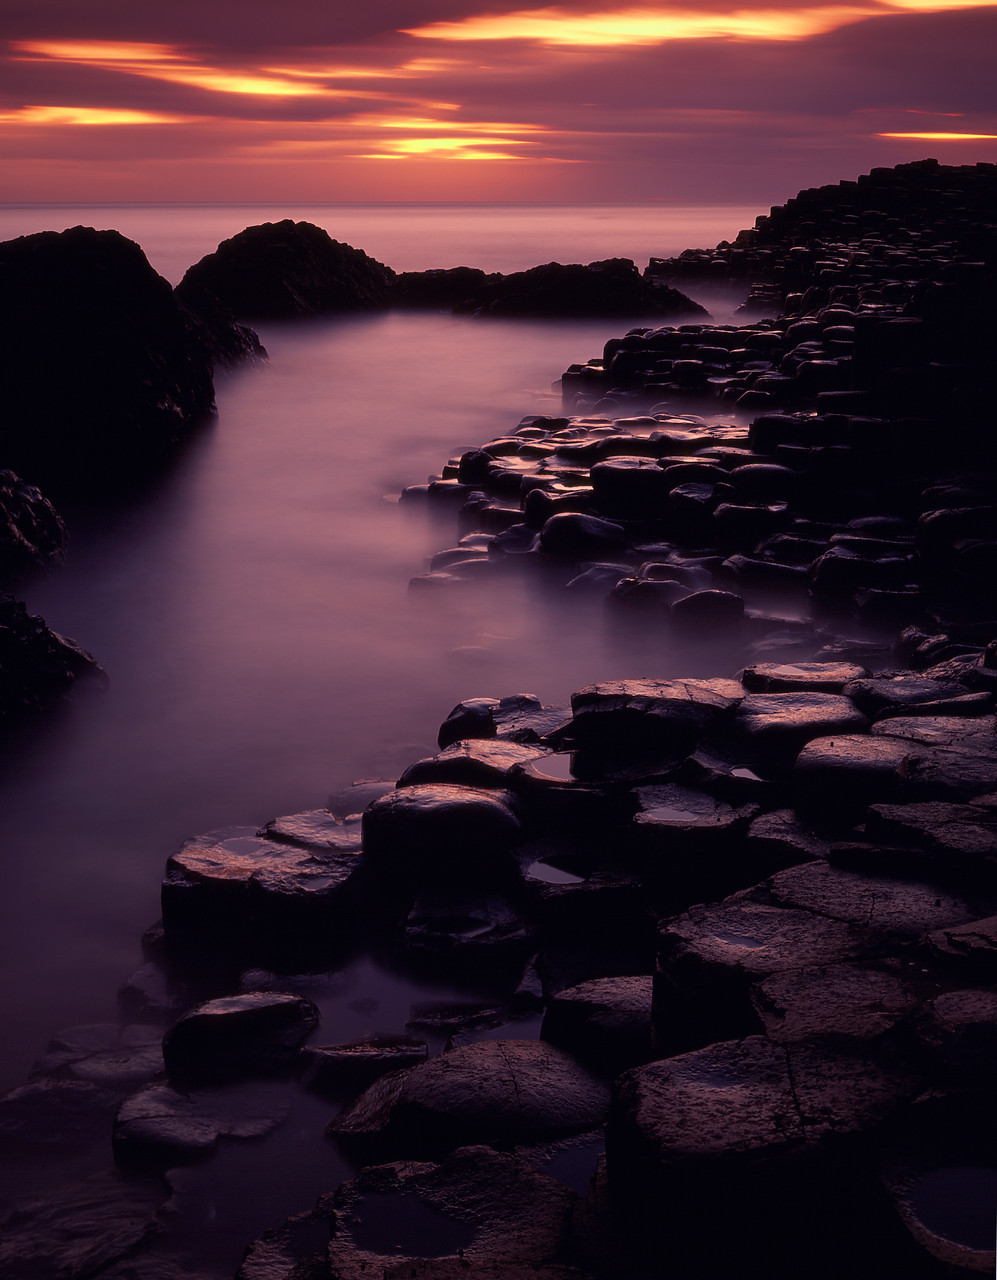 #955351-2 - Evening Light on Giant's Causeway, Co. Antrim, Northern Ireland